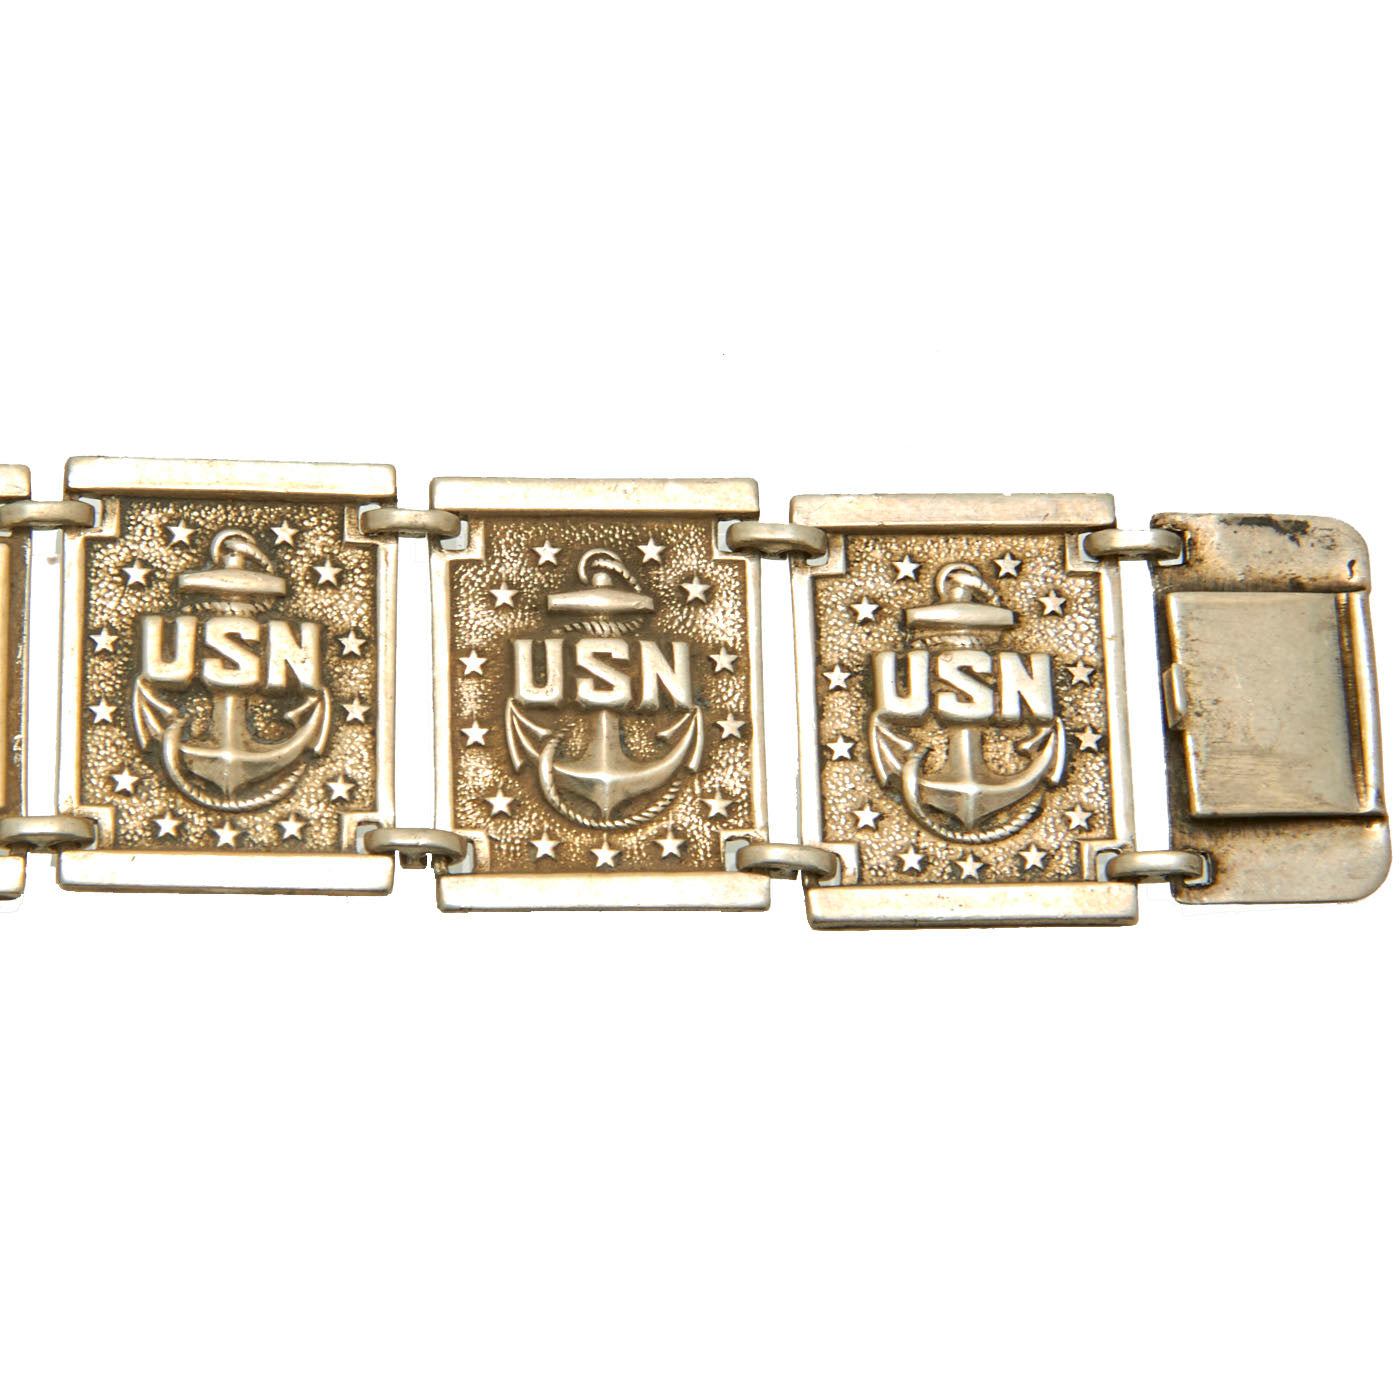 Vintage 1960s USN Navy Charm Bracelet Military Pride From 